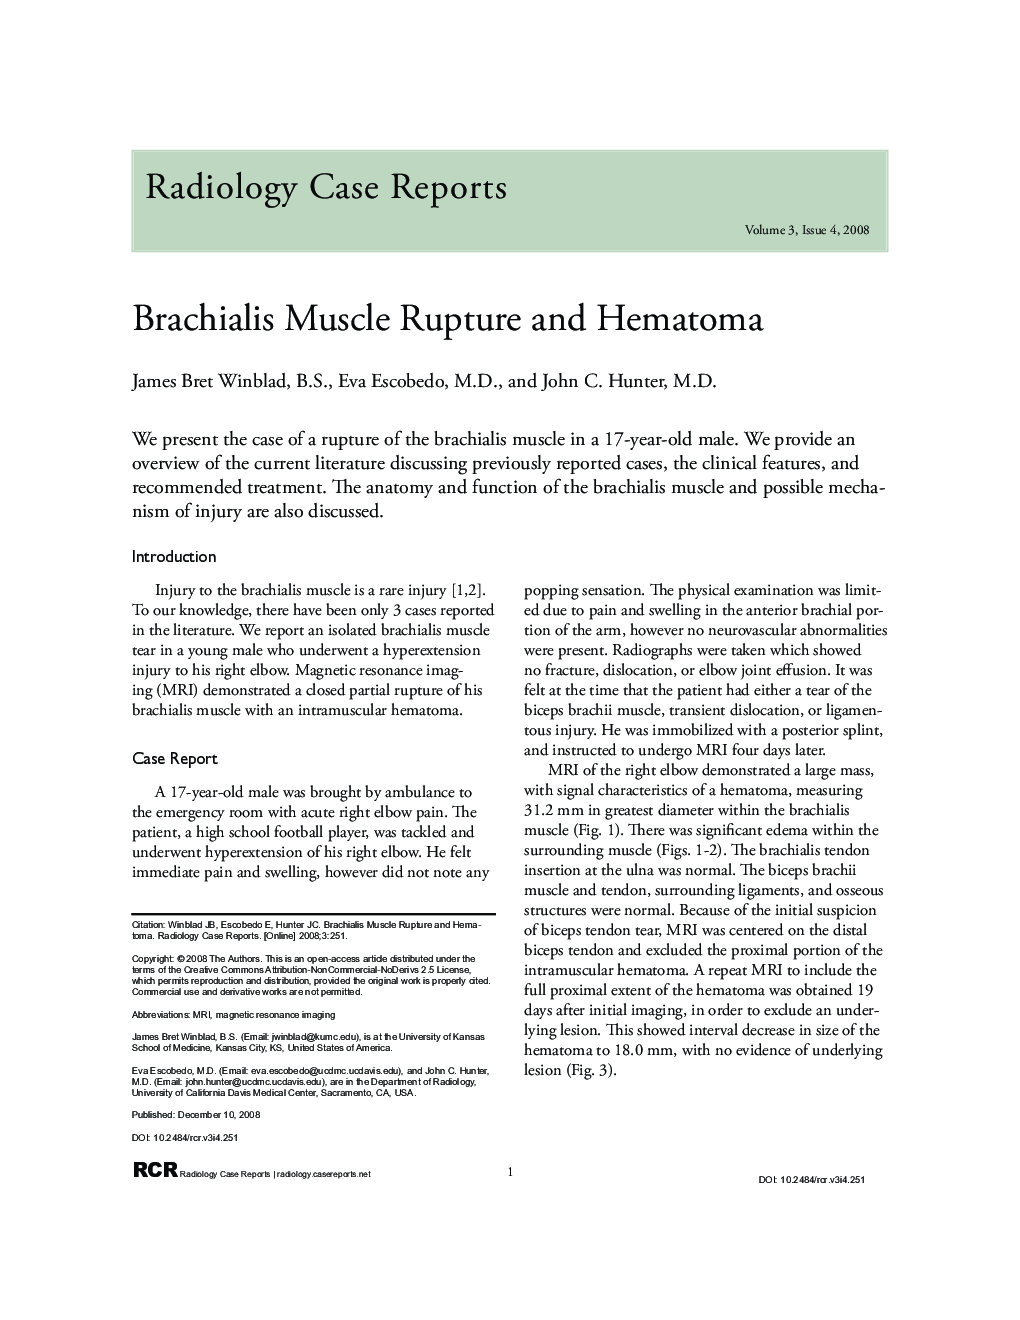 Brachialis Muscle Rupture and Hematoma